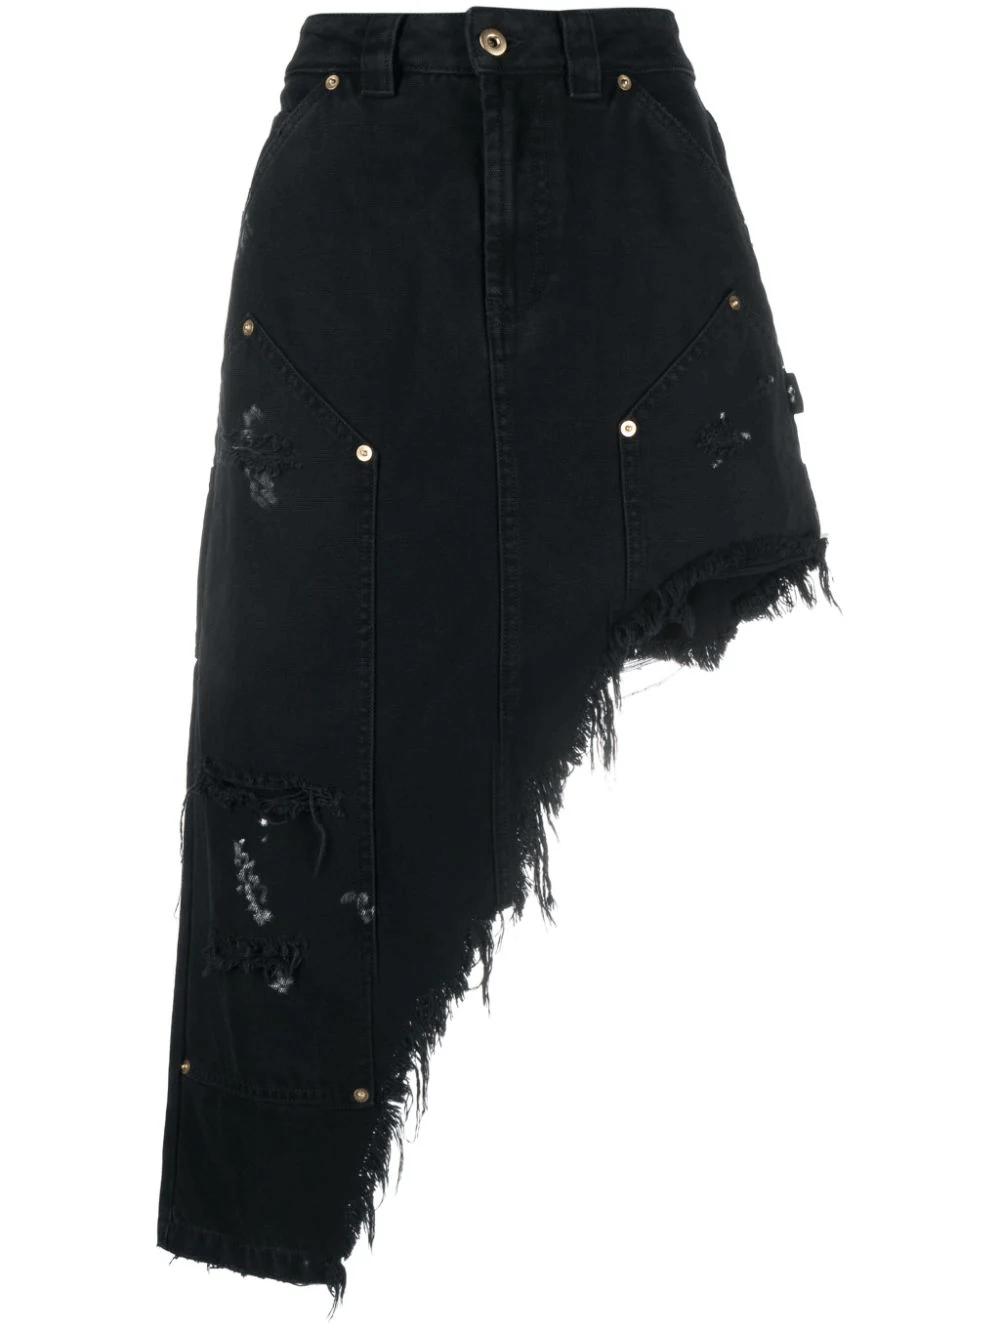 VAQUERA-Womens-Workwear-Skirt-Woven-Black-1